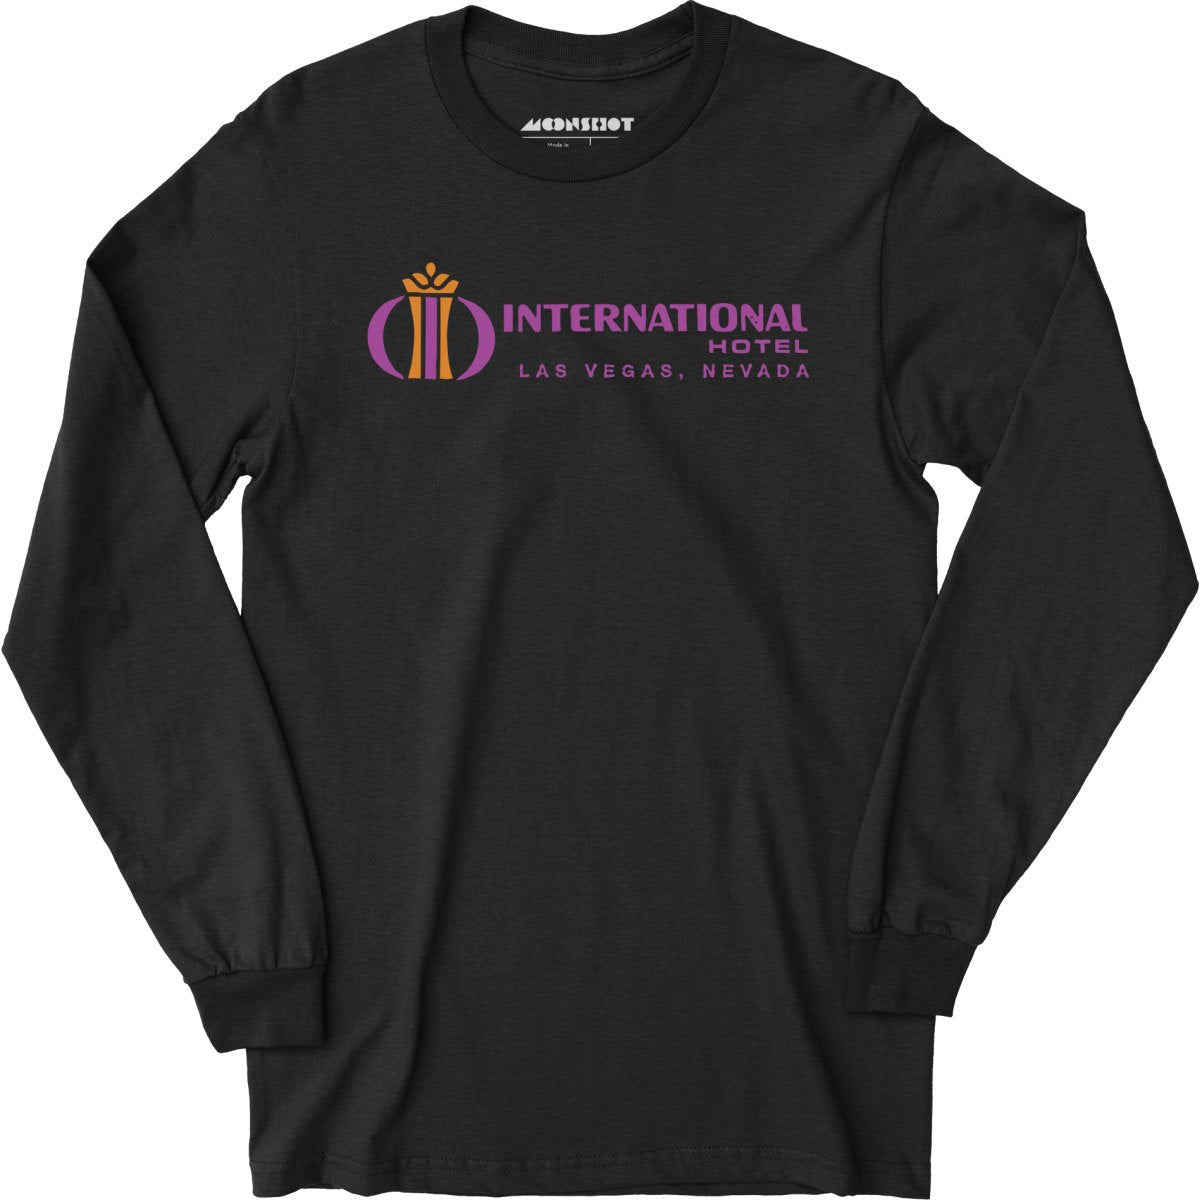 International Hotel - Vintage Las Vegas - Long Sleeve T-Shirt